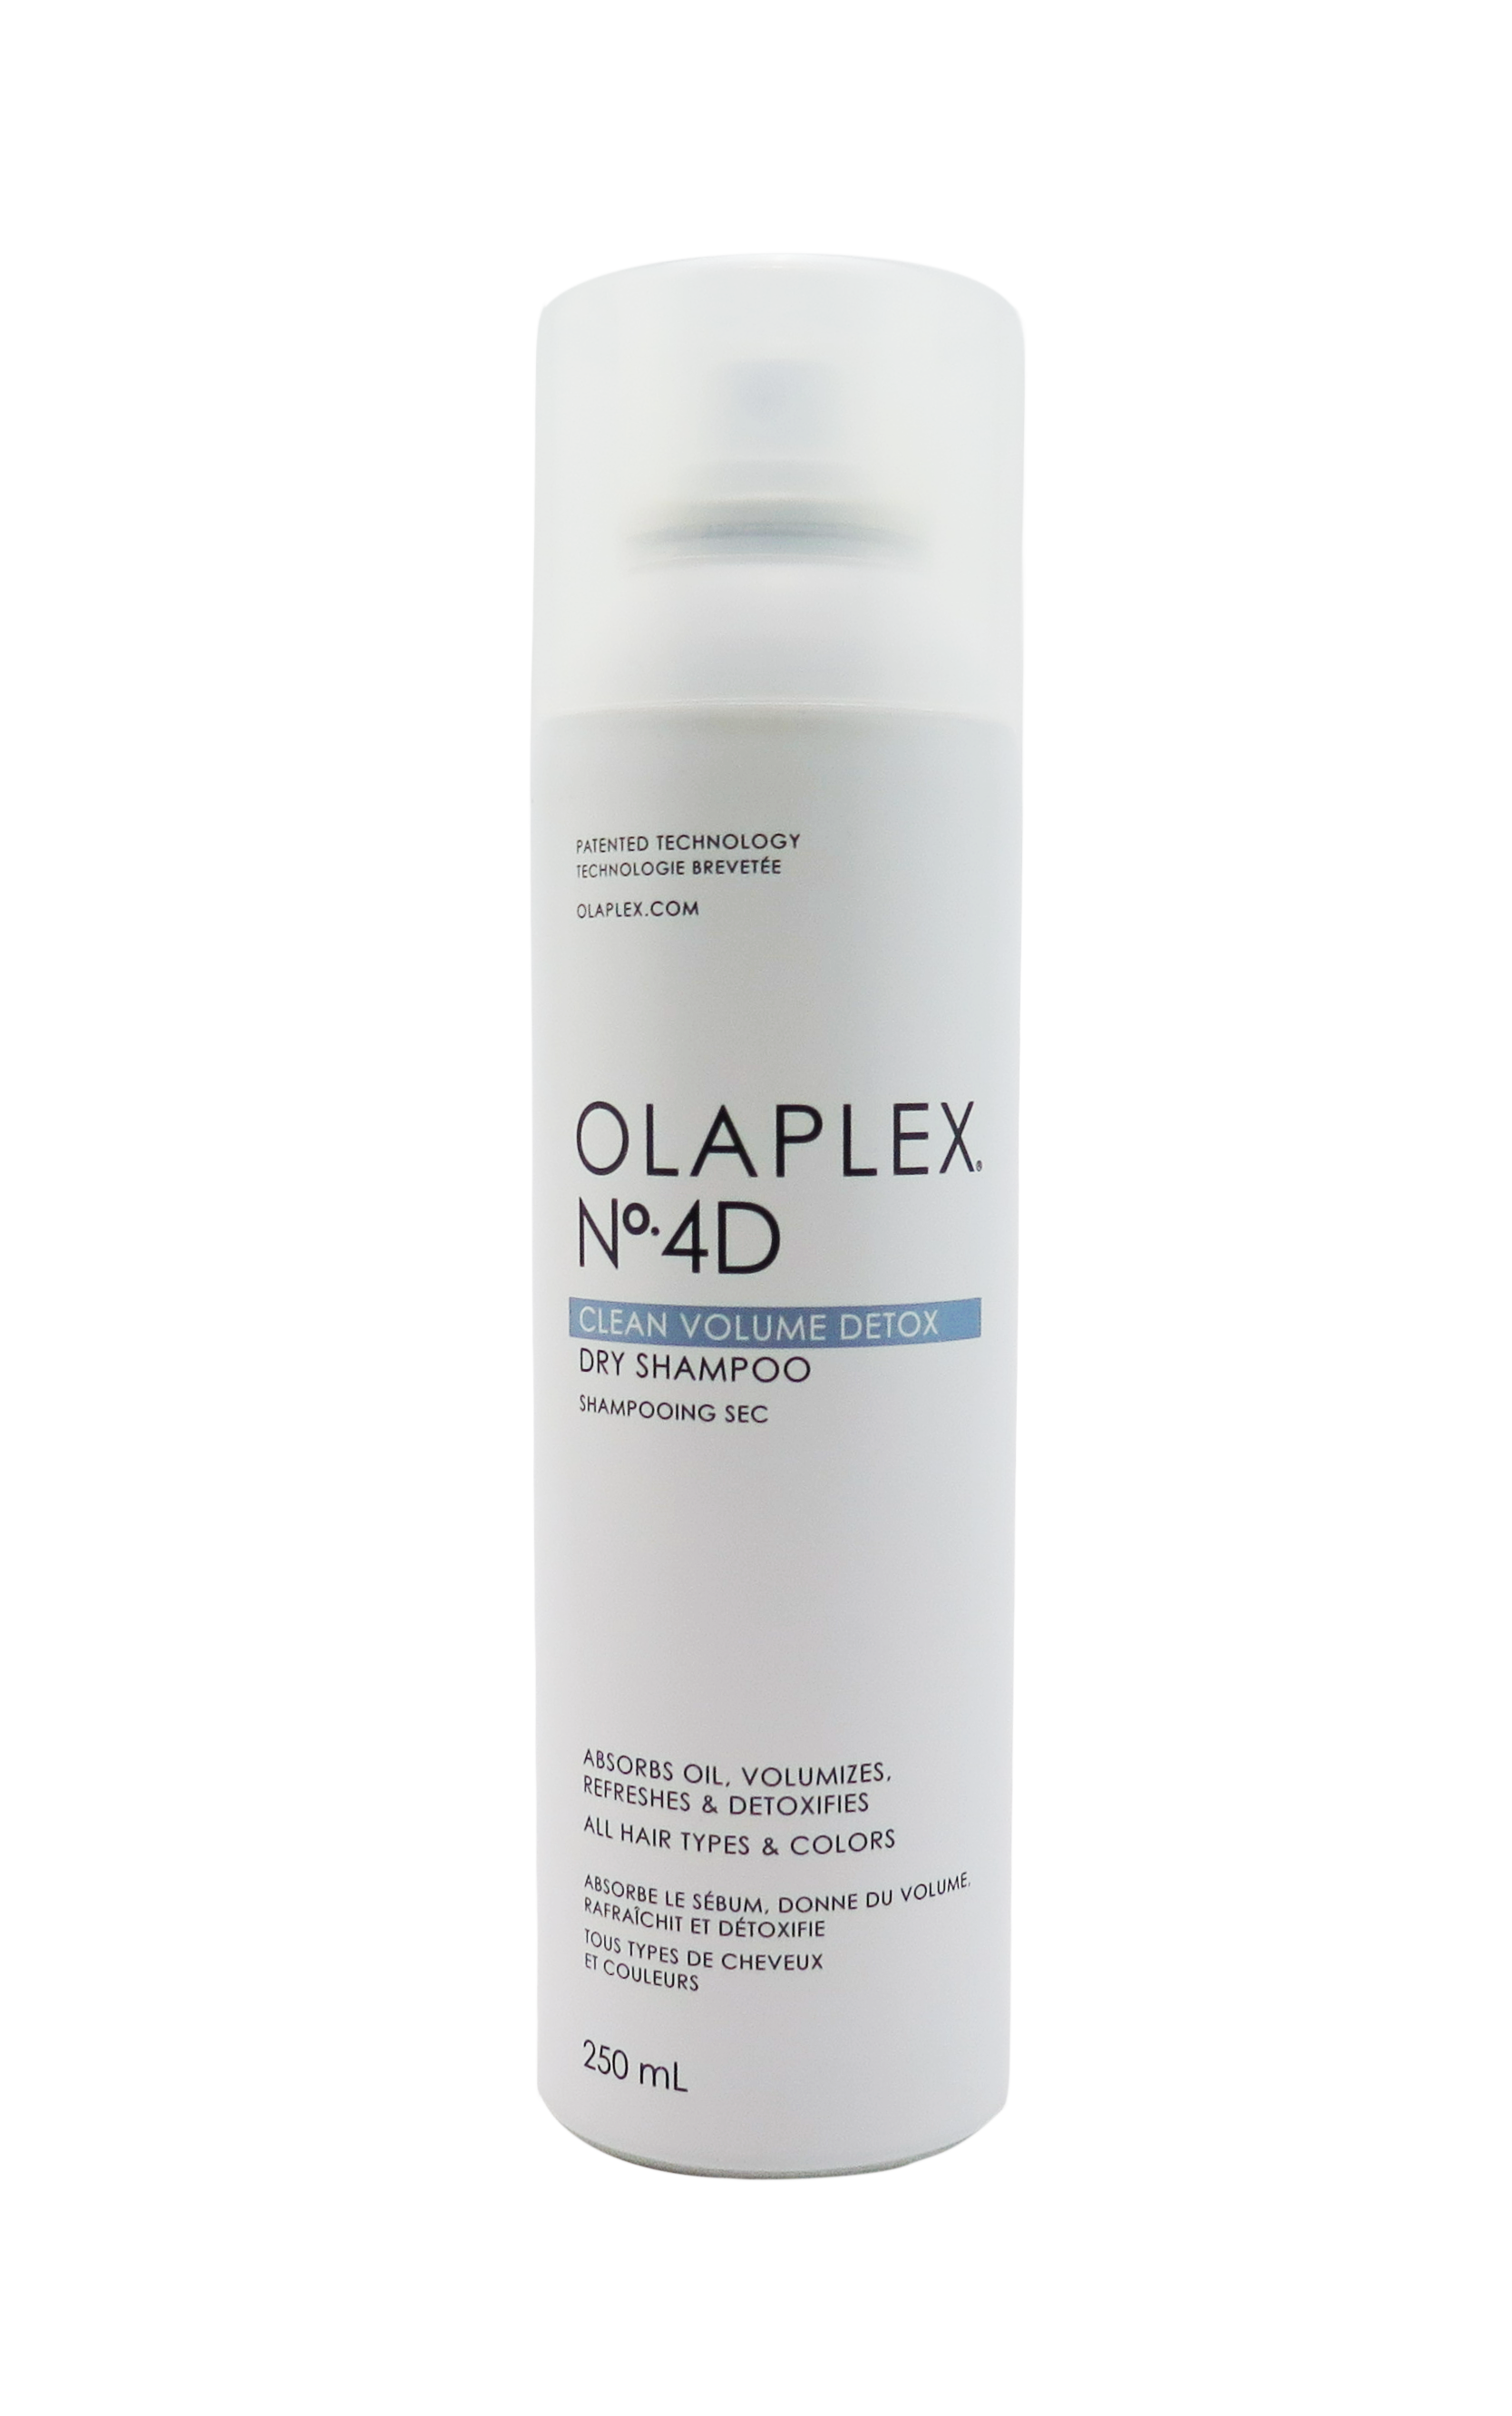 Olaplex No. 4D Clean Volume Detox Dry Shampoo 250mL